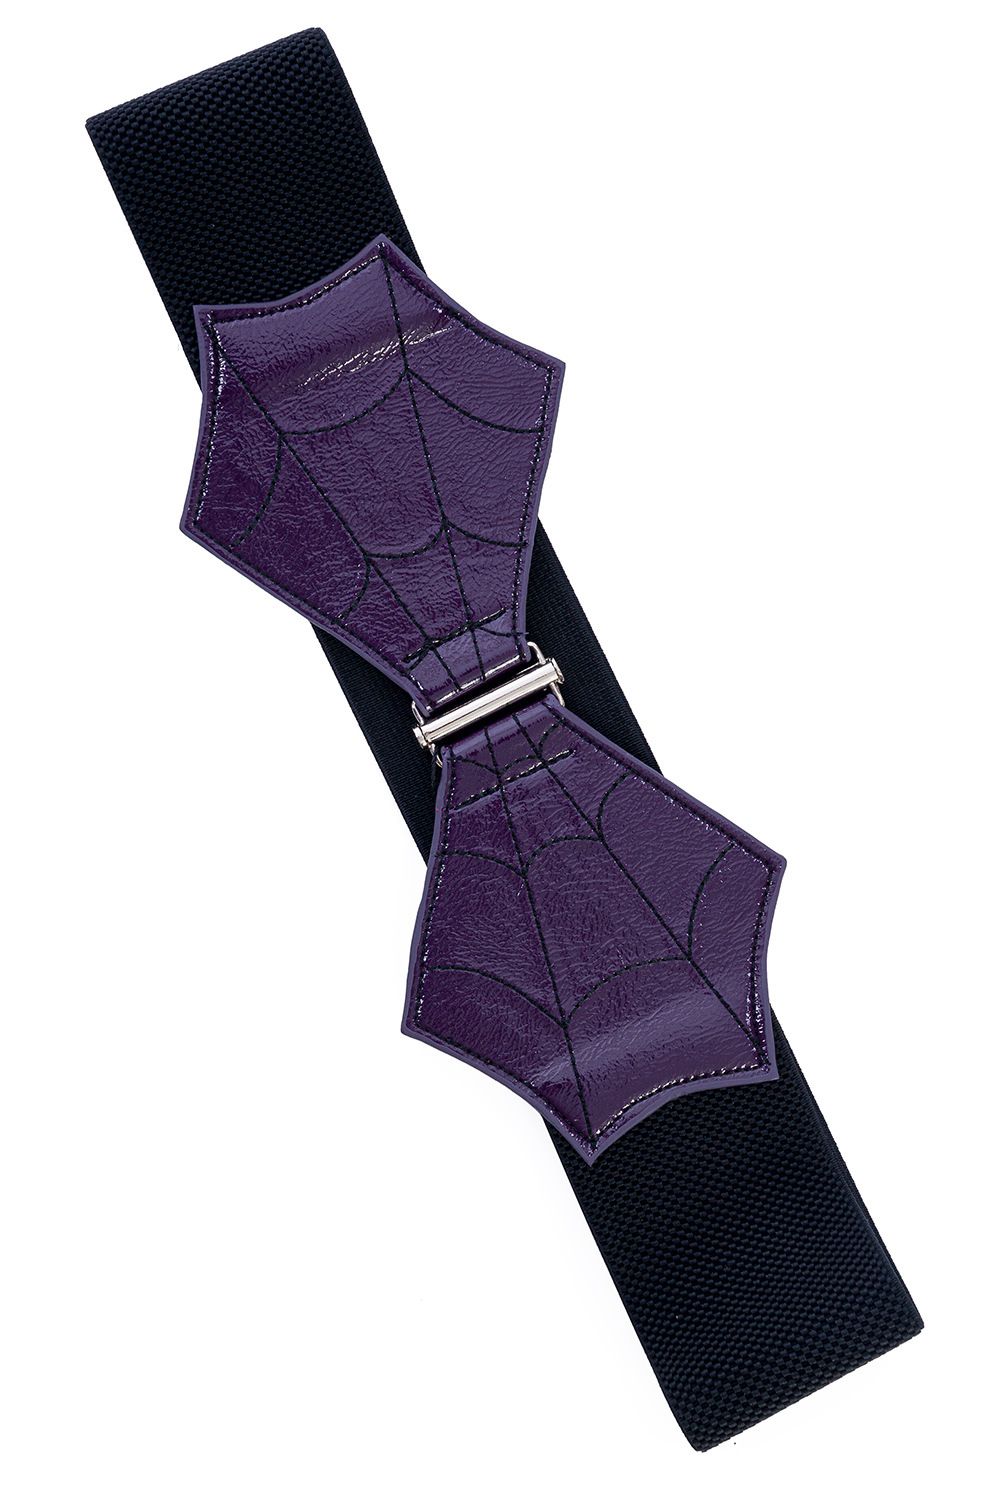 BNAC45413PUR_ceinture-banned-gothabilly-gothique-pin-up-elastique-spider-violet